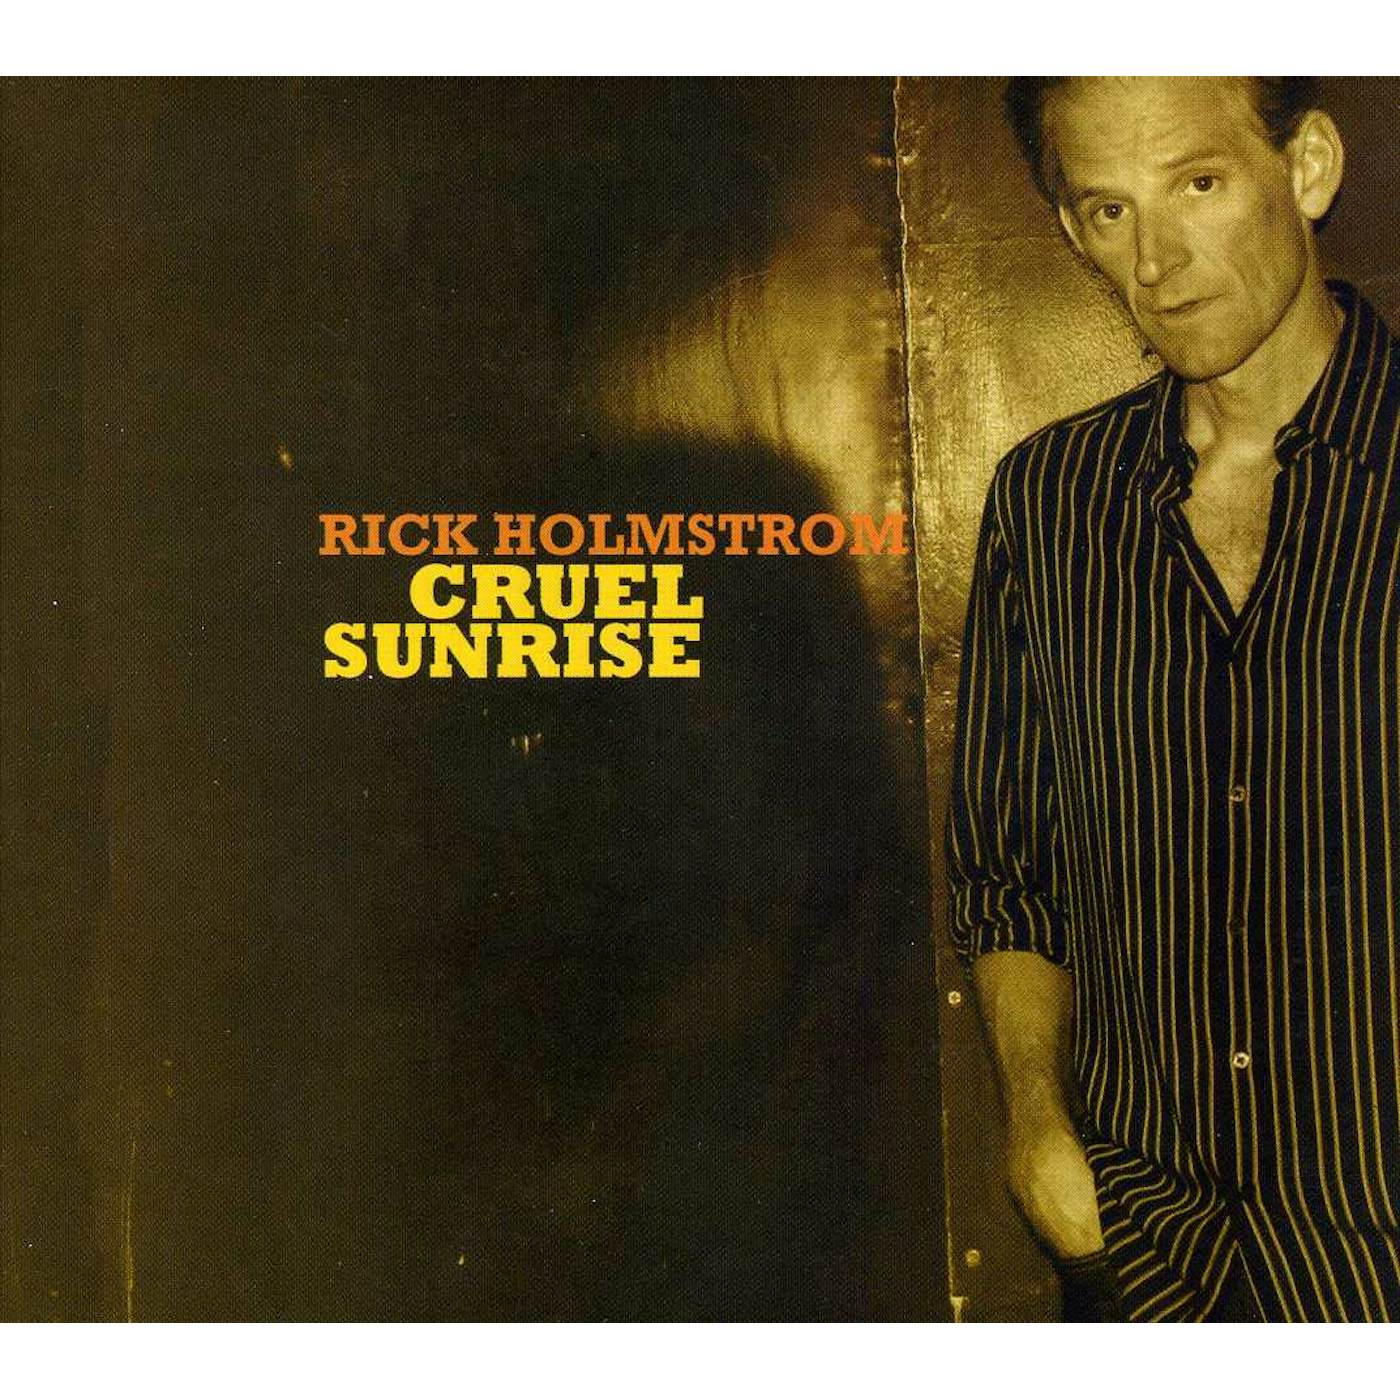 Rick Holmstrom CRUEL SUNRISE CD